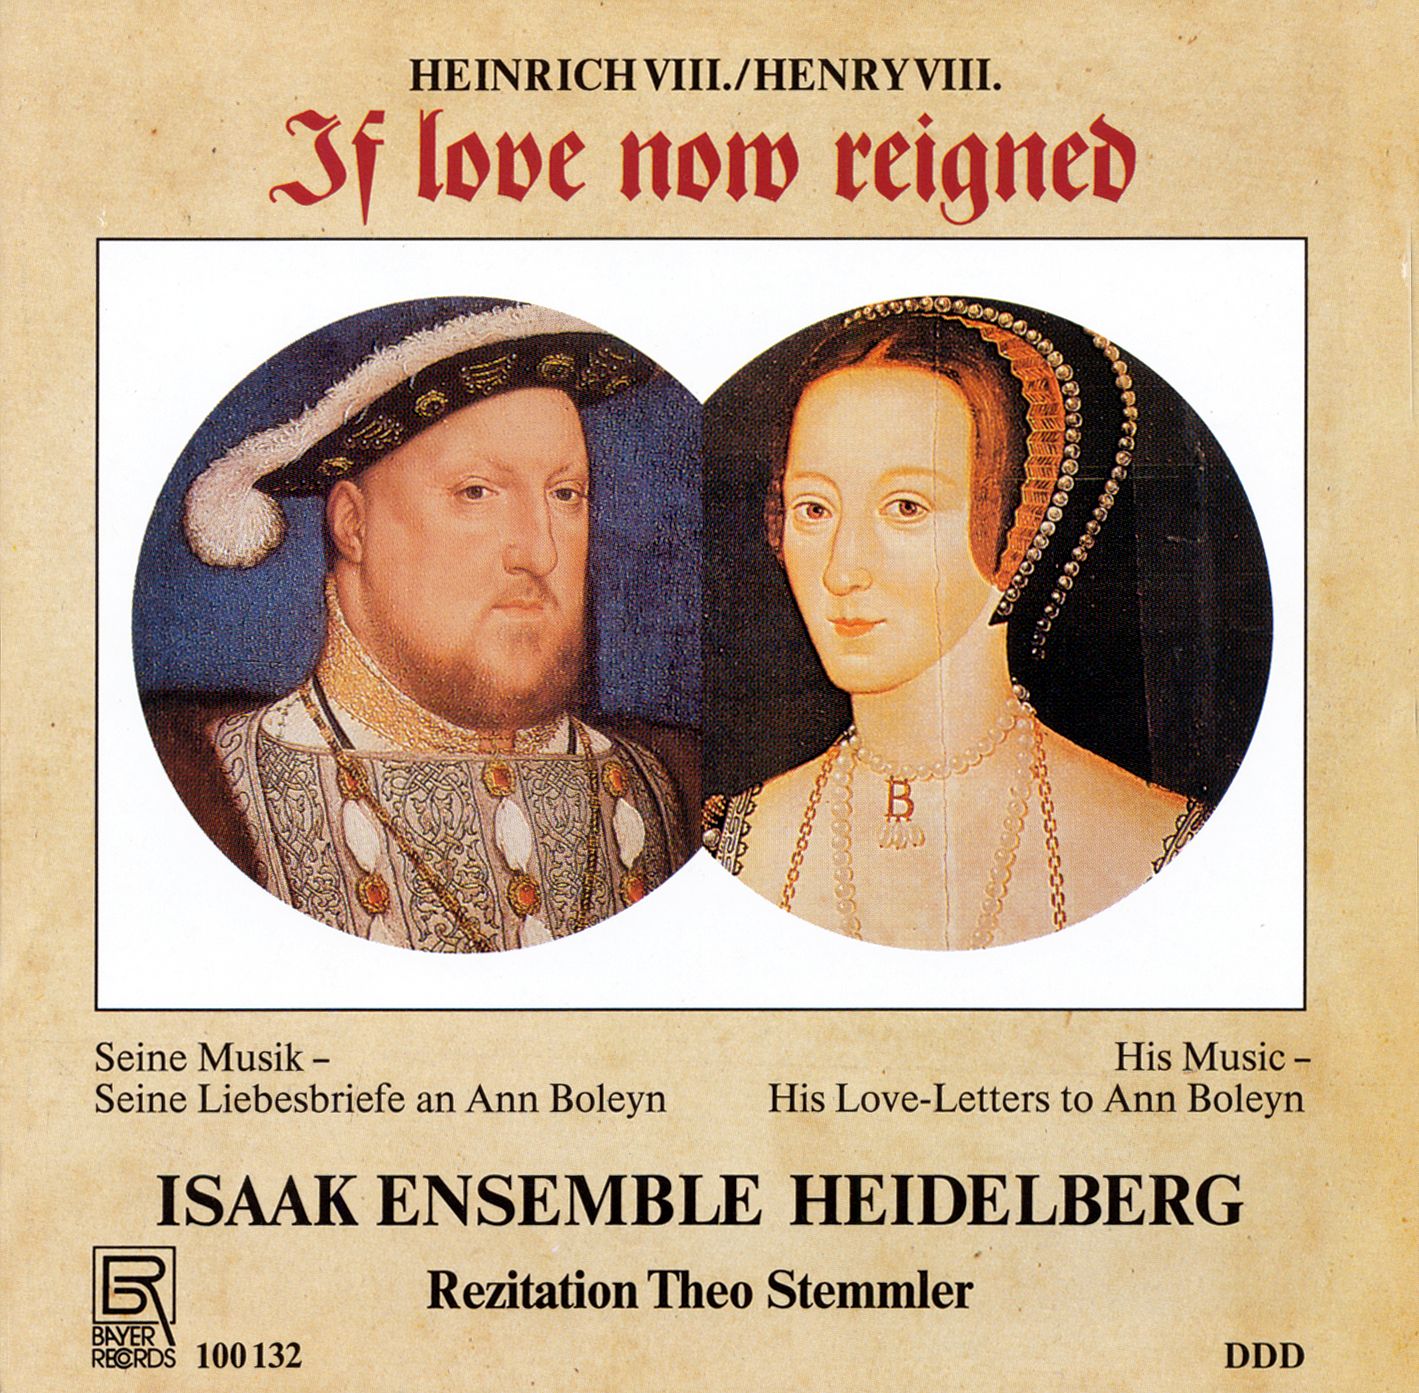 Heinrich VIII. - If Love now reigned